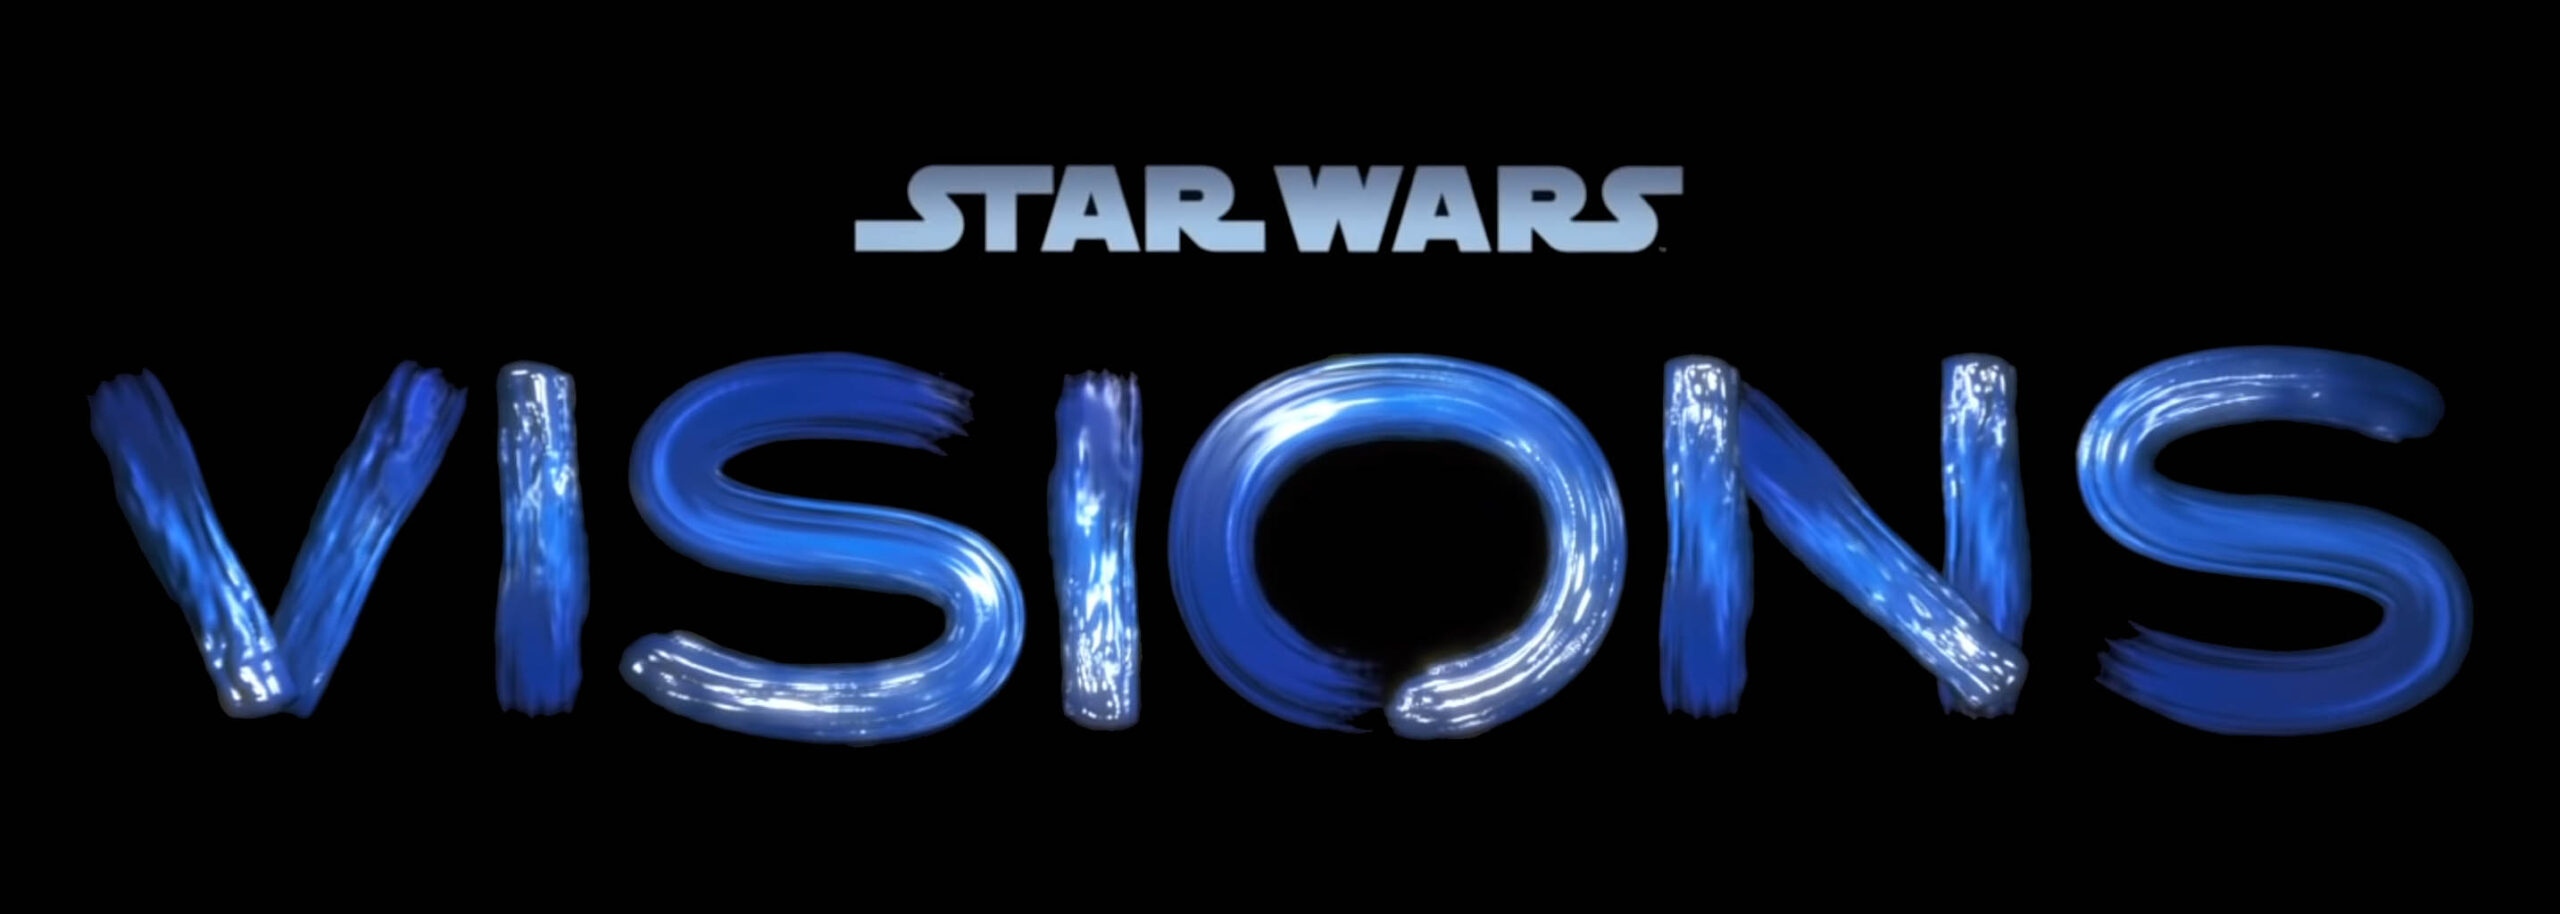 Star Wars: Visions trailer